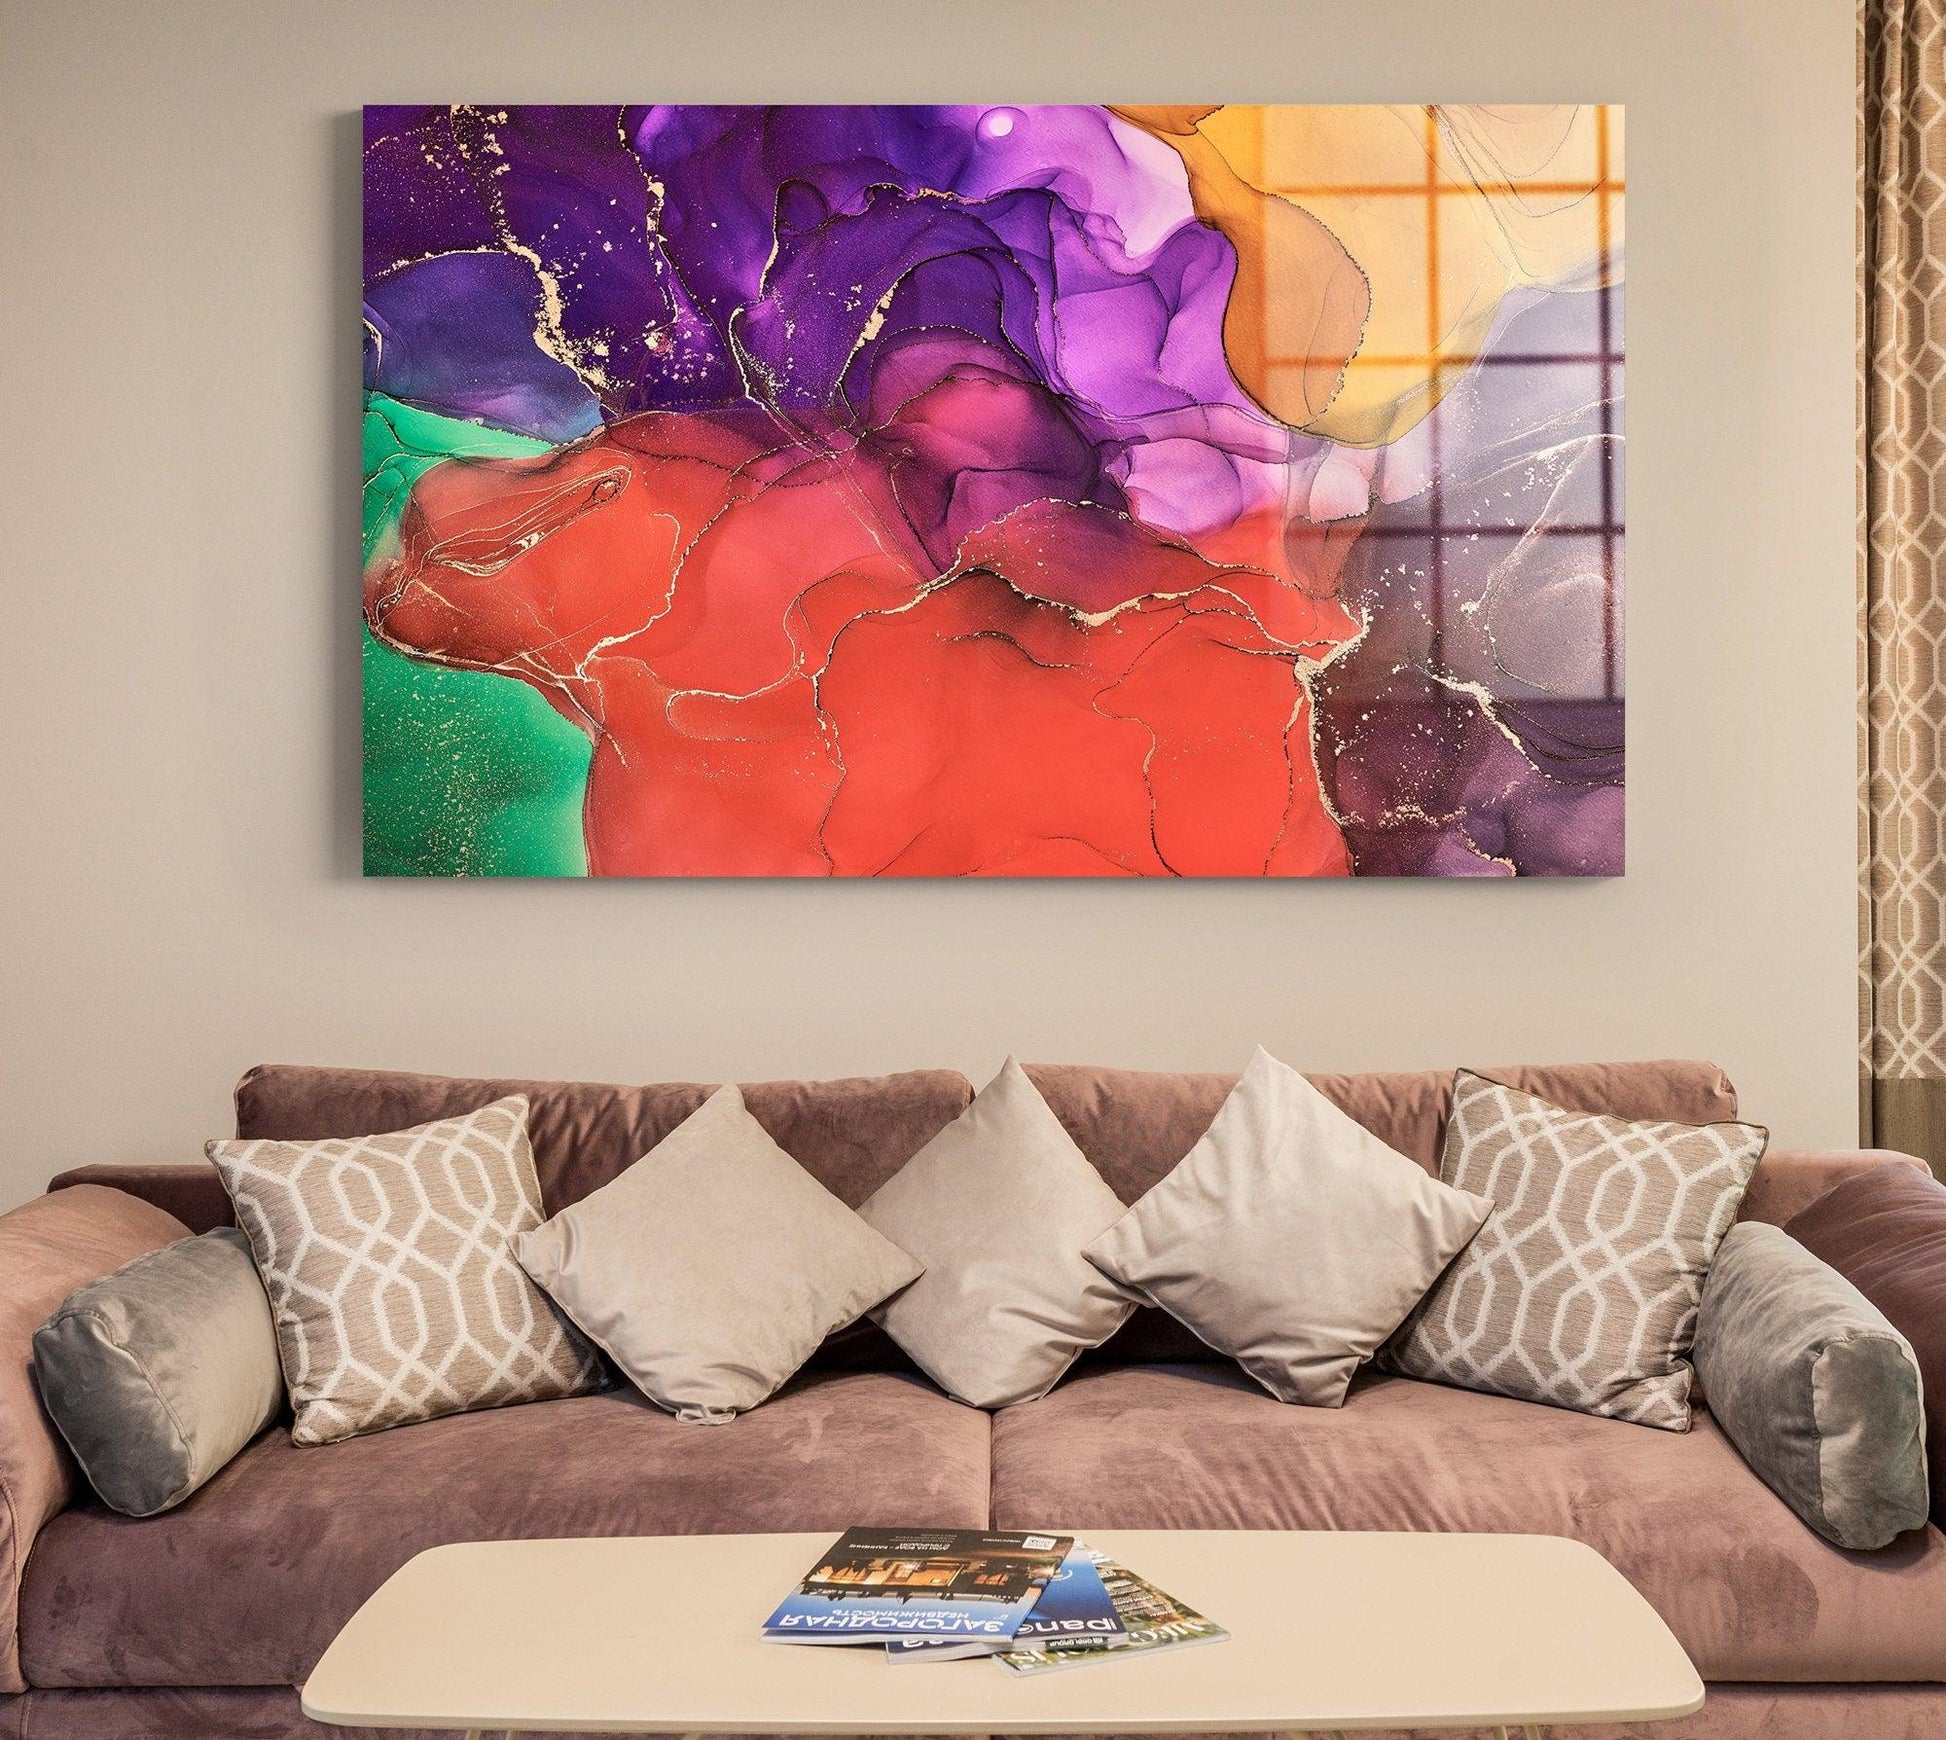 Colorful abstract glass decor| Glass Wall Art, Canvas Wall Art, colorful marble wall art, marble abstract art, colorful wall art canvas,